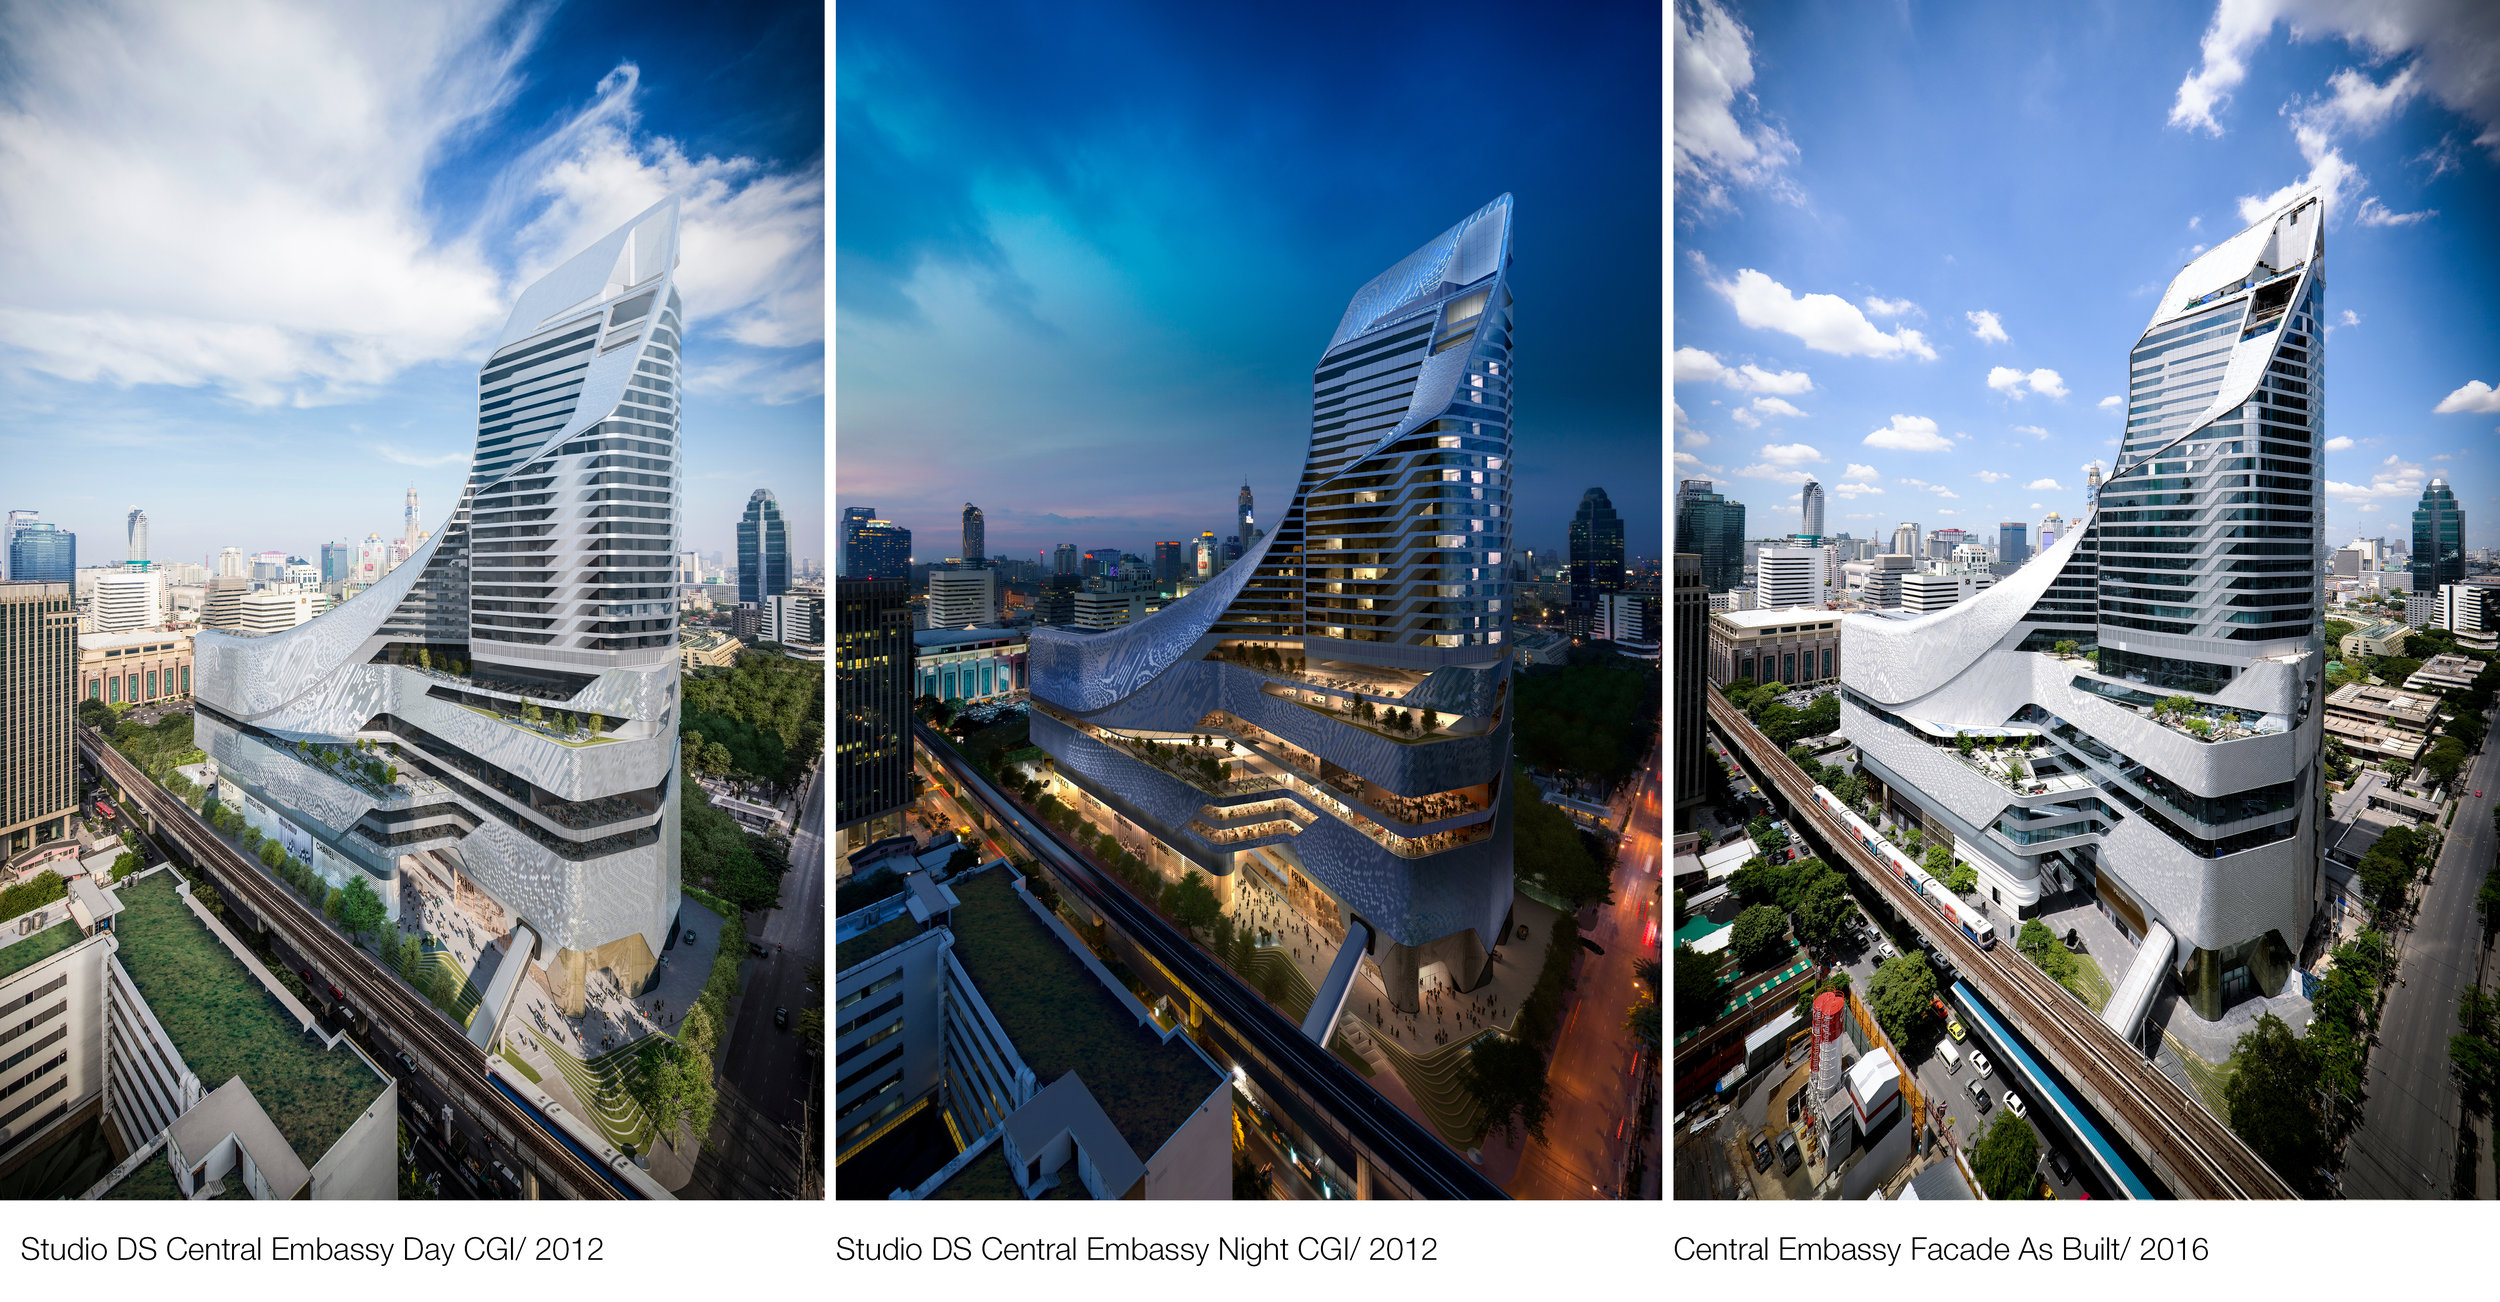 © Copyright Studio DS 2018 - Central Embassy Architecture Comparison